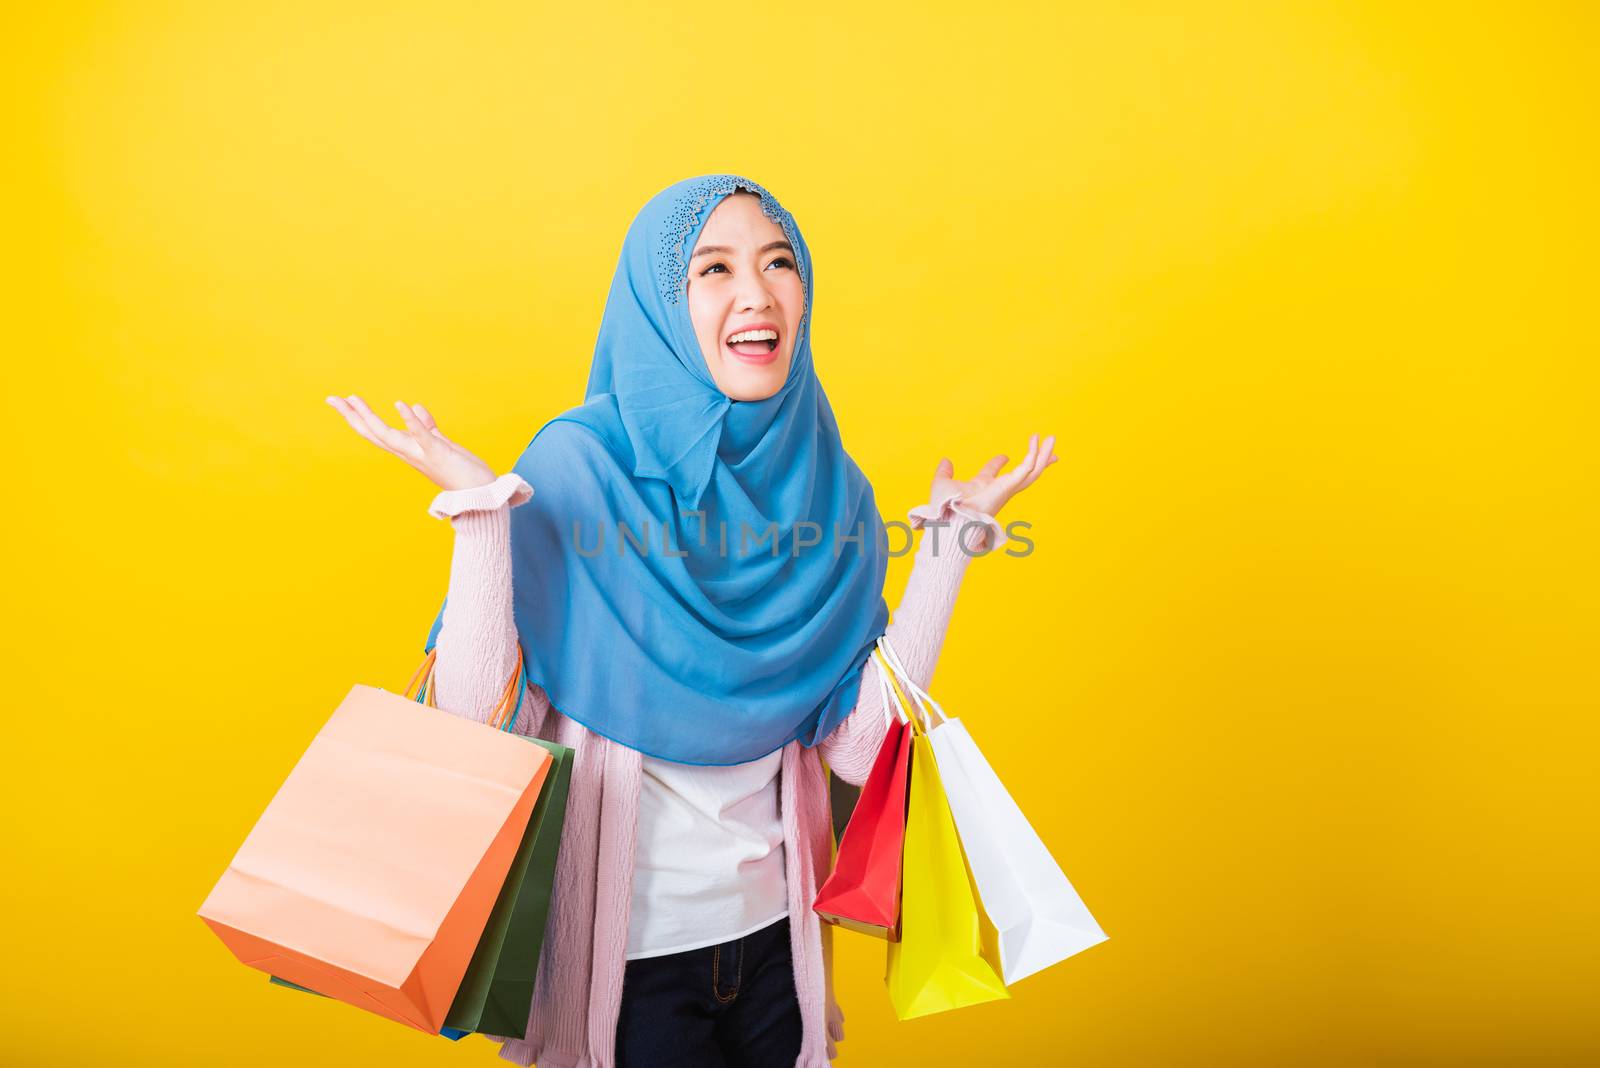 Asian Muslim Arab woman Islam wear hijab she holding colorful sh by Sorapop